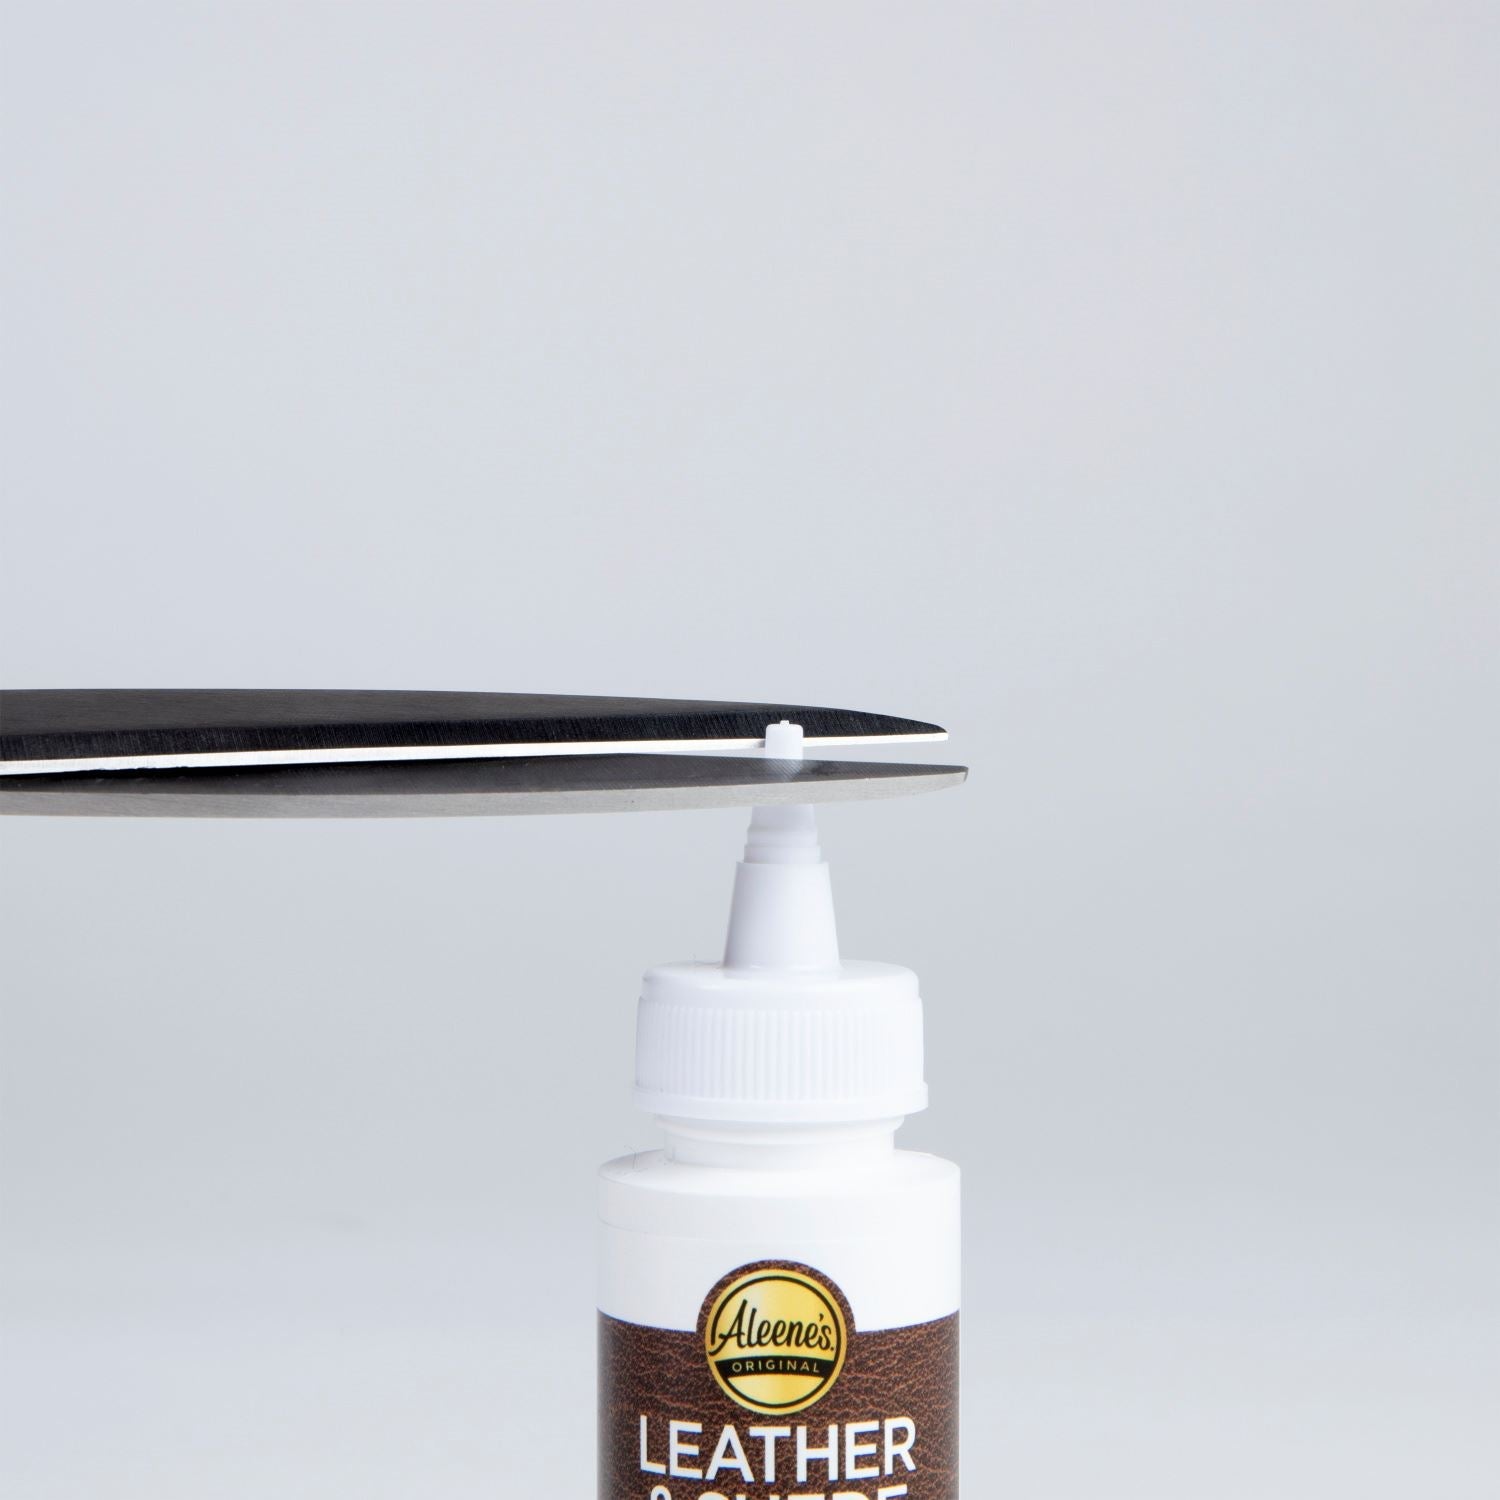 Leather & Suede Repair Glue, Craft and Repair Adhesive,  4 fl oz.,  Aleene's®